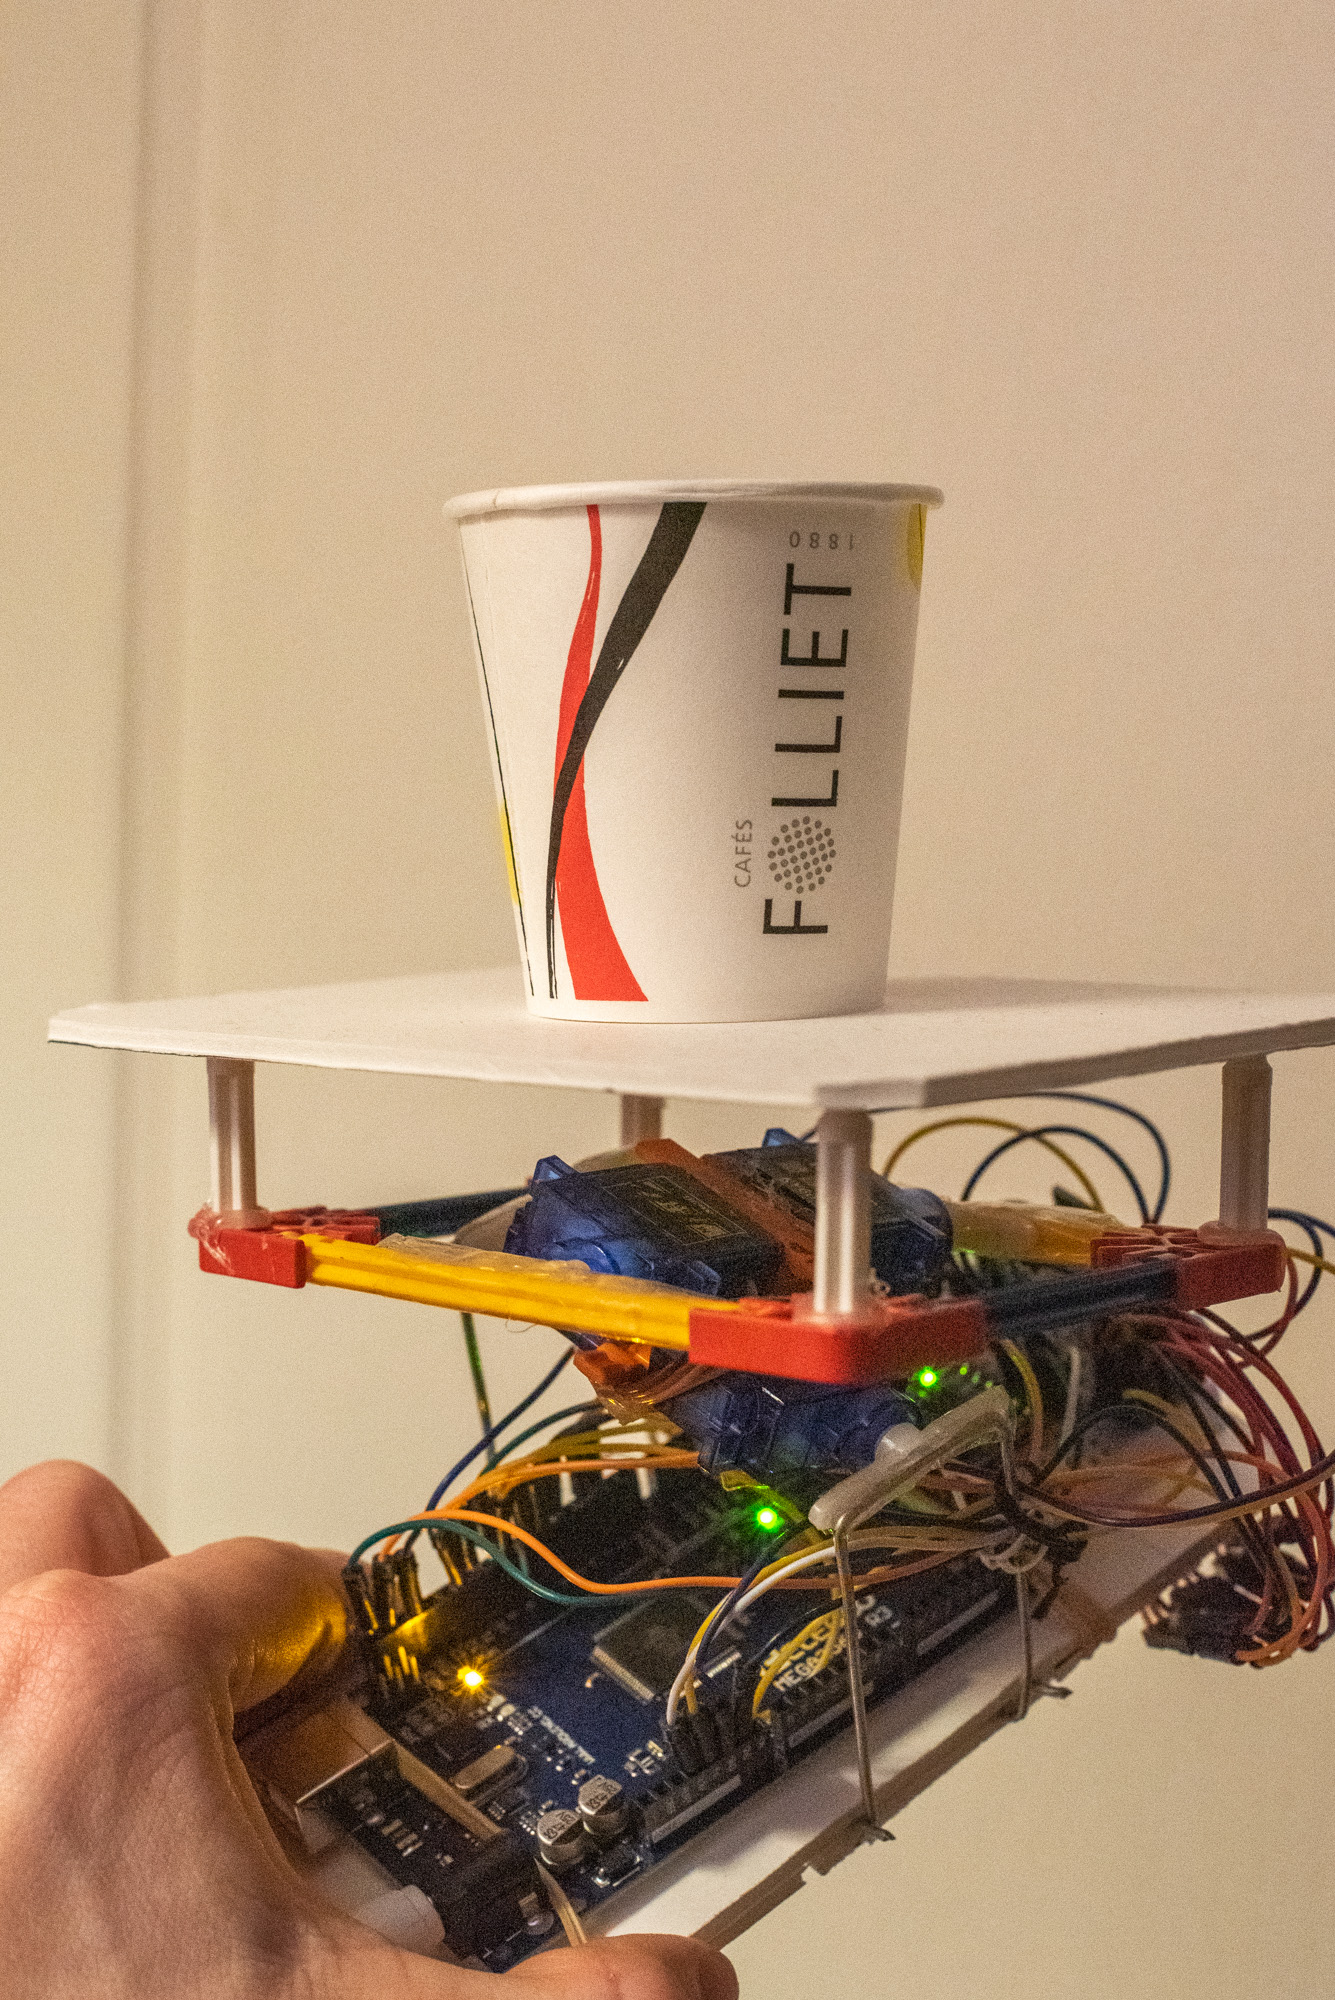 I made an unusual non-spill cup holder - Robotics - Arduino Forum